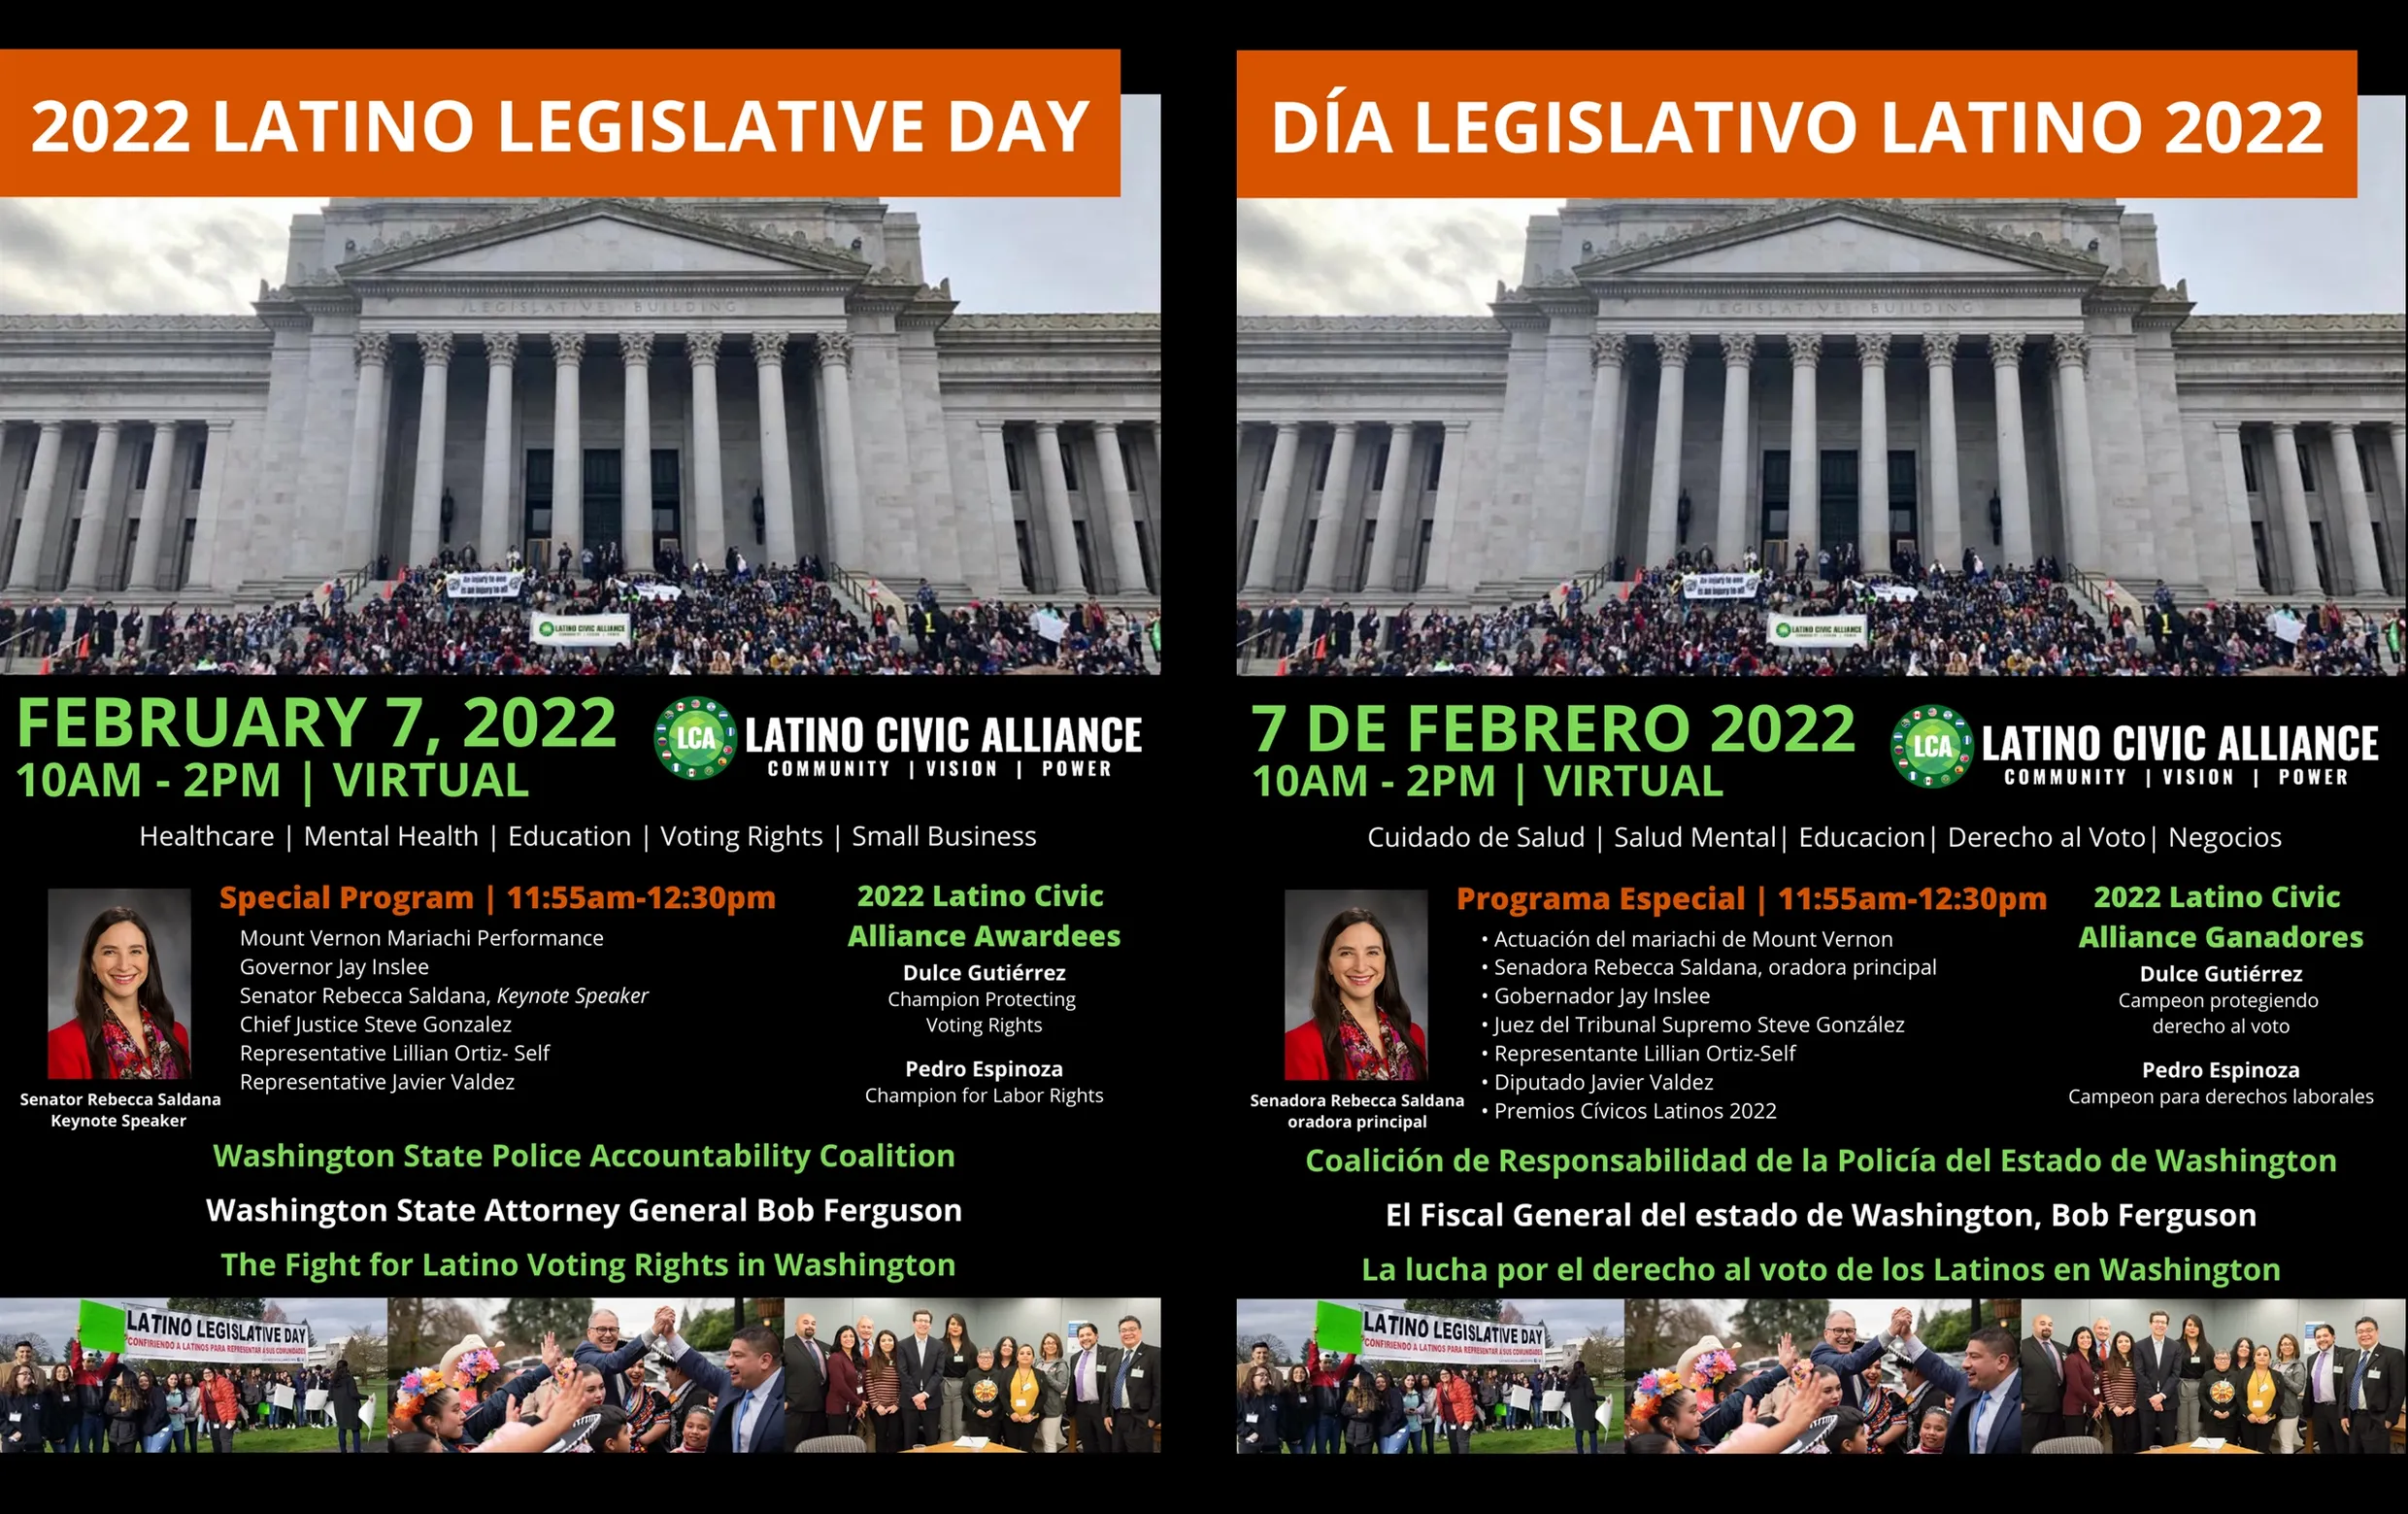 2022 Latino Legislative Day on FEBRUARY 7TH, 2022 | 10AM - 2PM